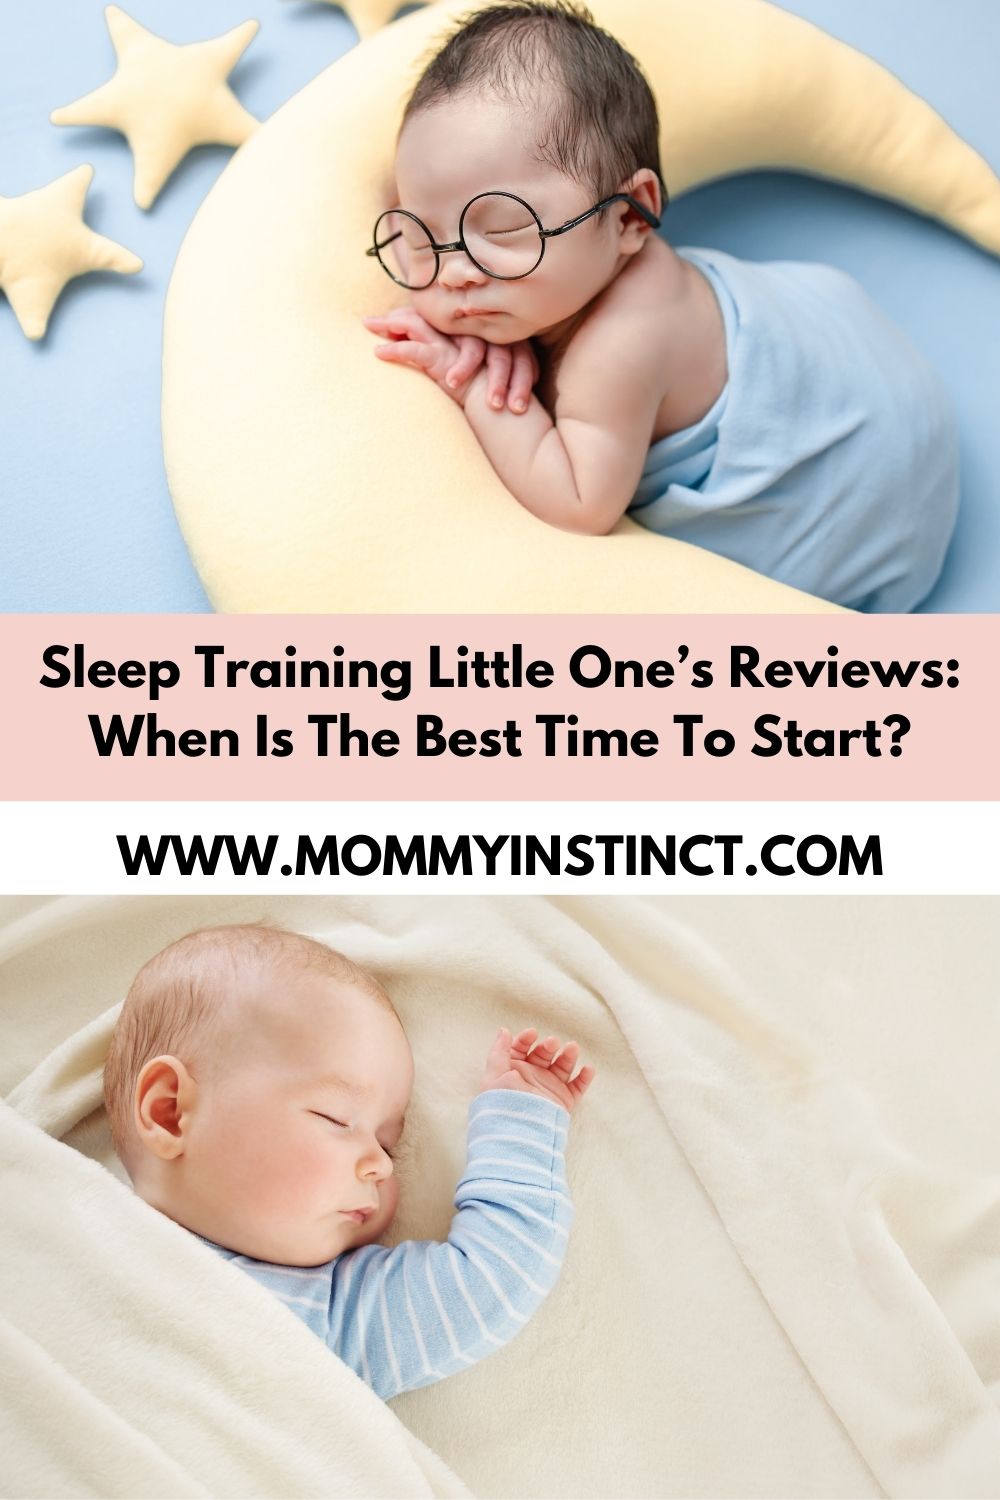 Sleep Training Little One’s Reviews